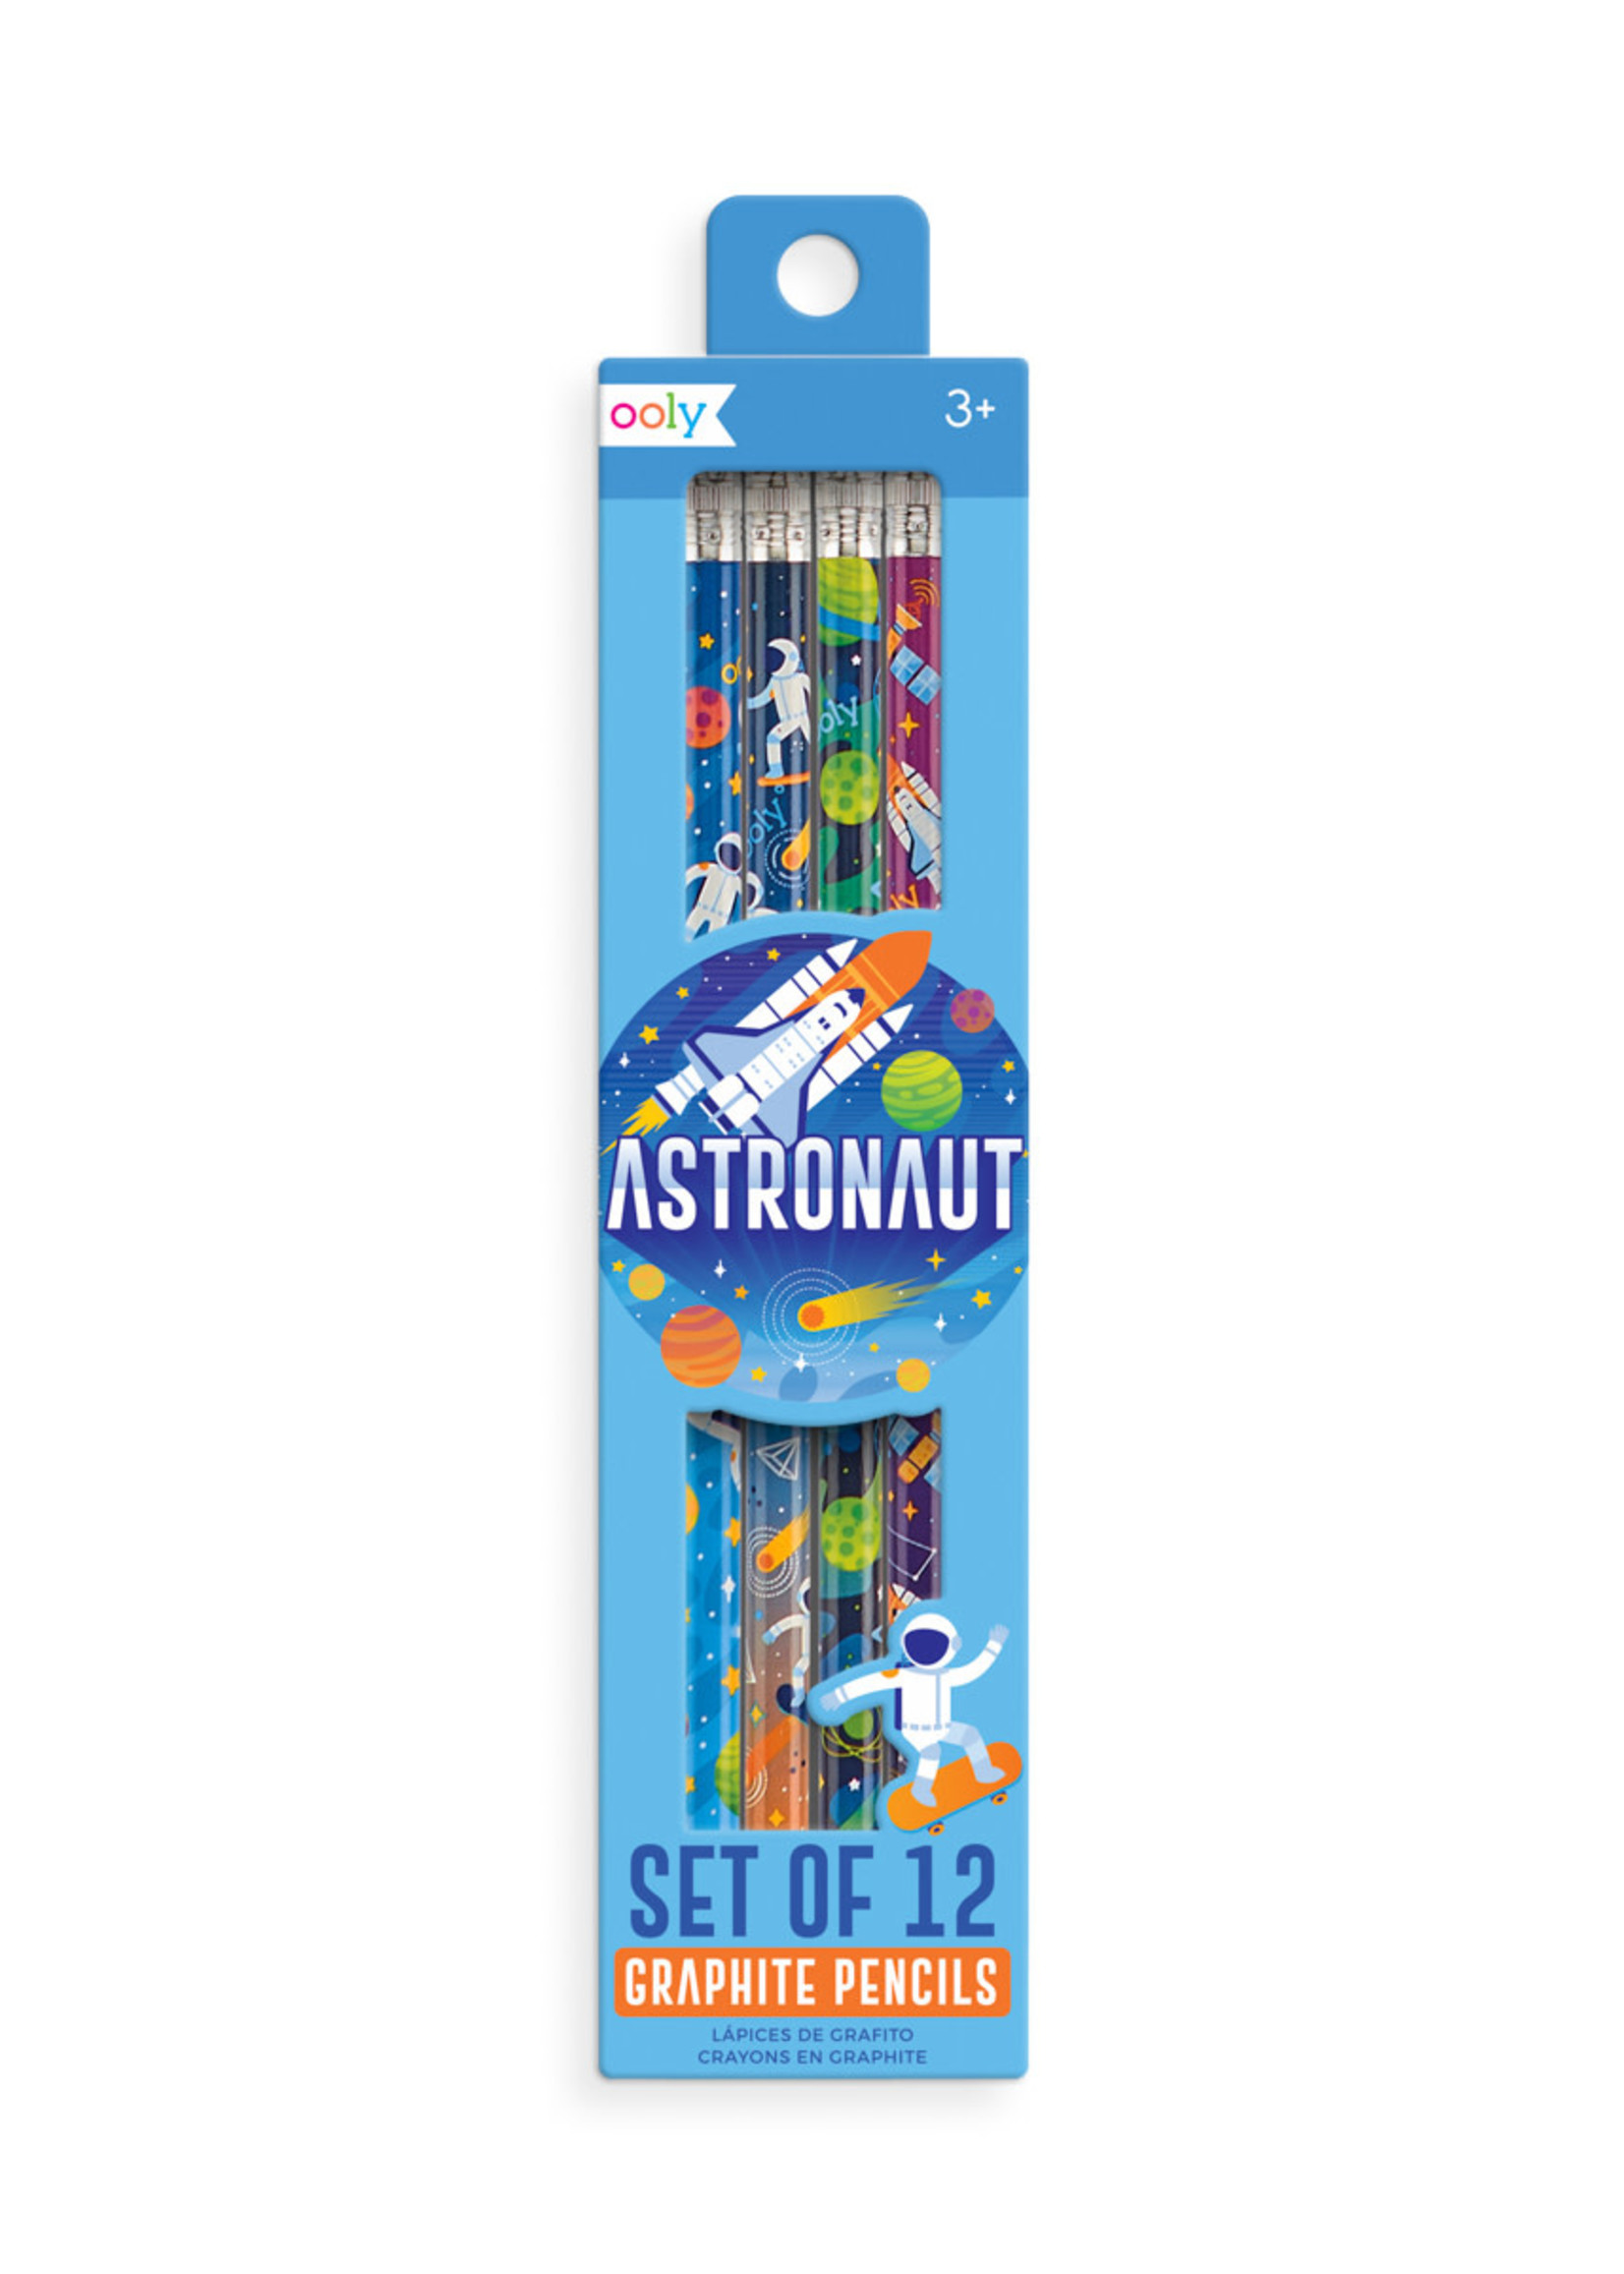 OOLY Astronaut Graphite Pencils - Set of 12